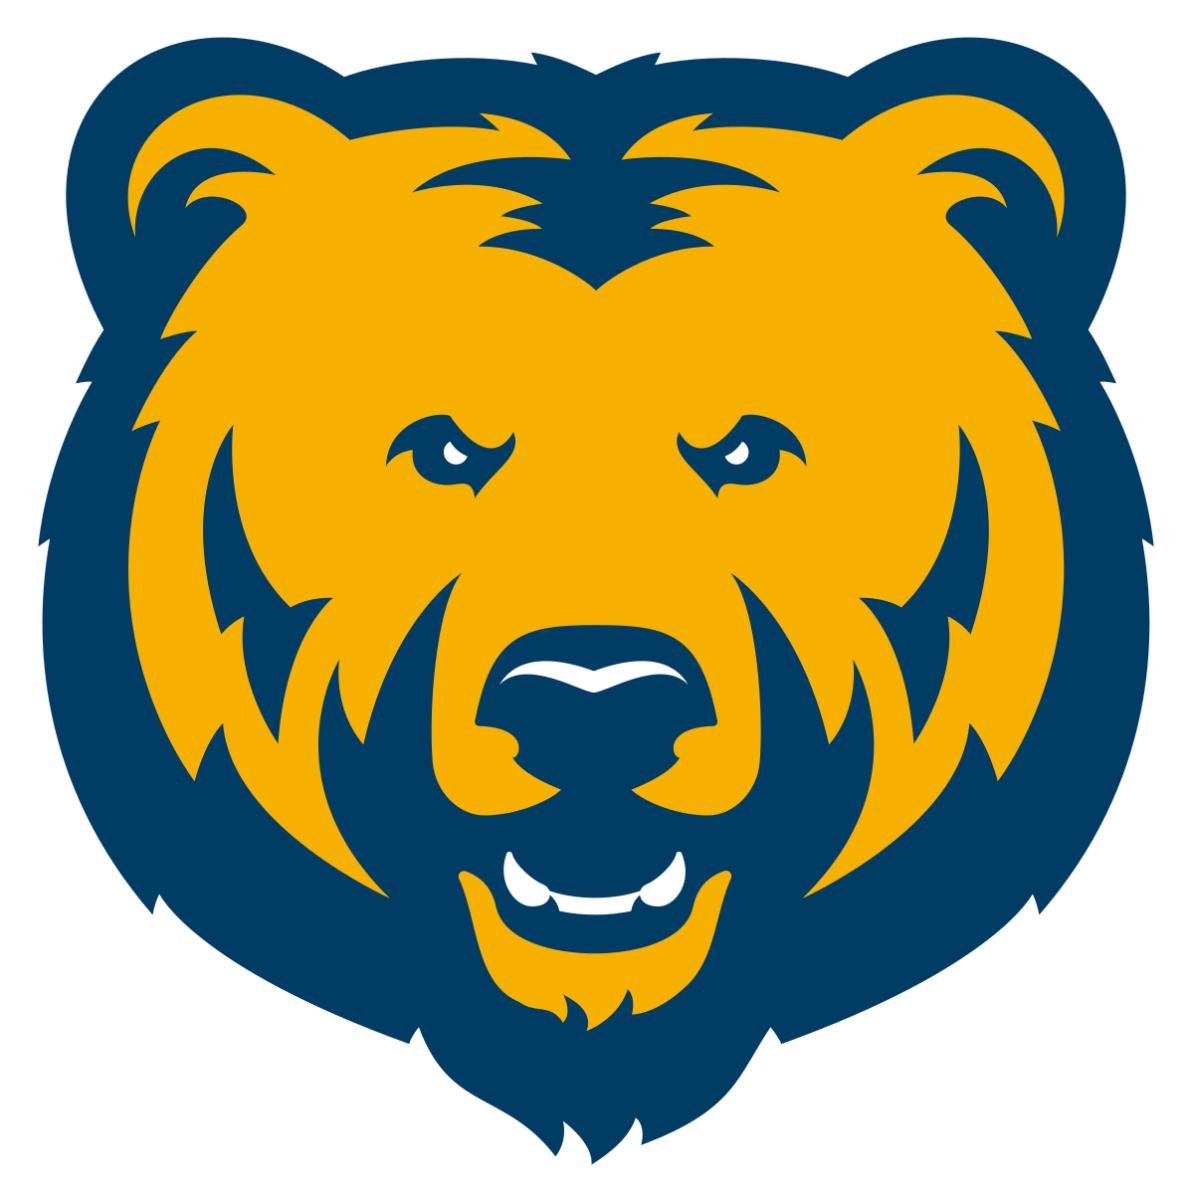 Northern Colorado bears fotoball logo